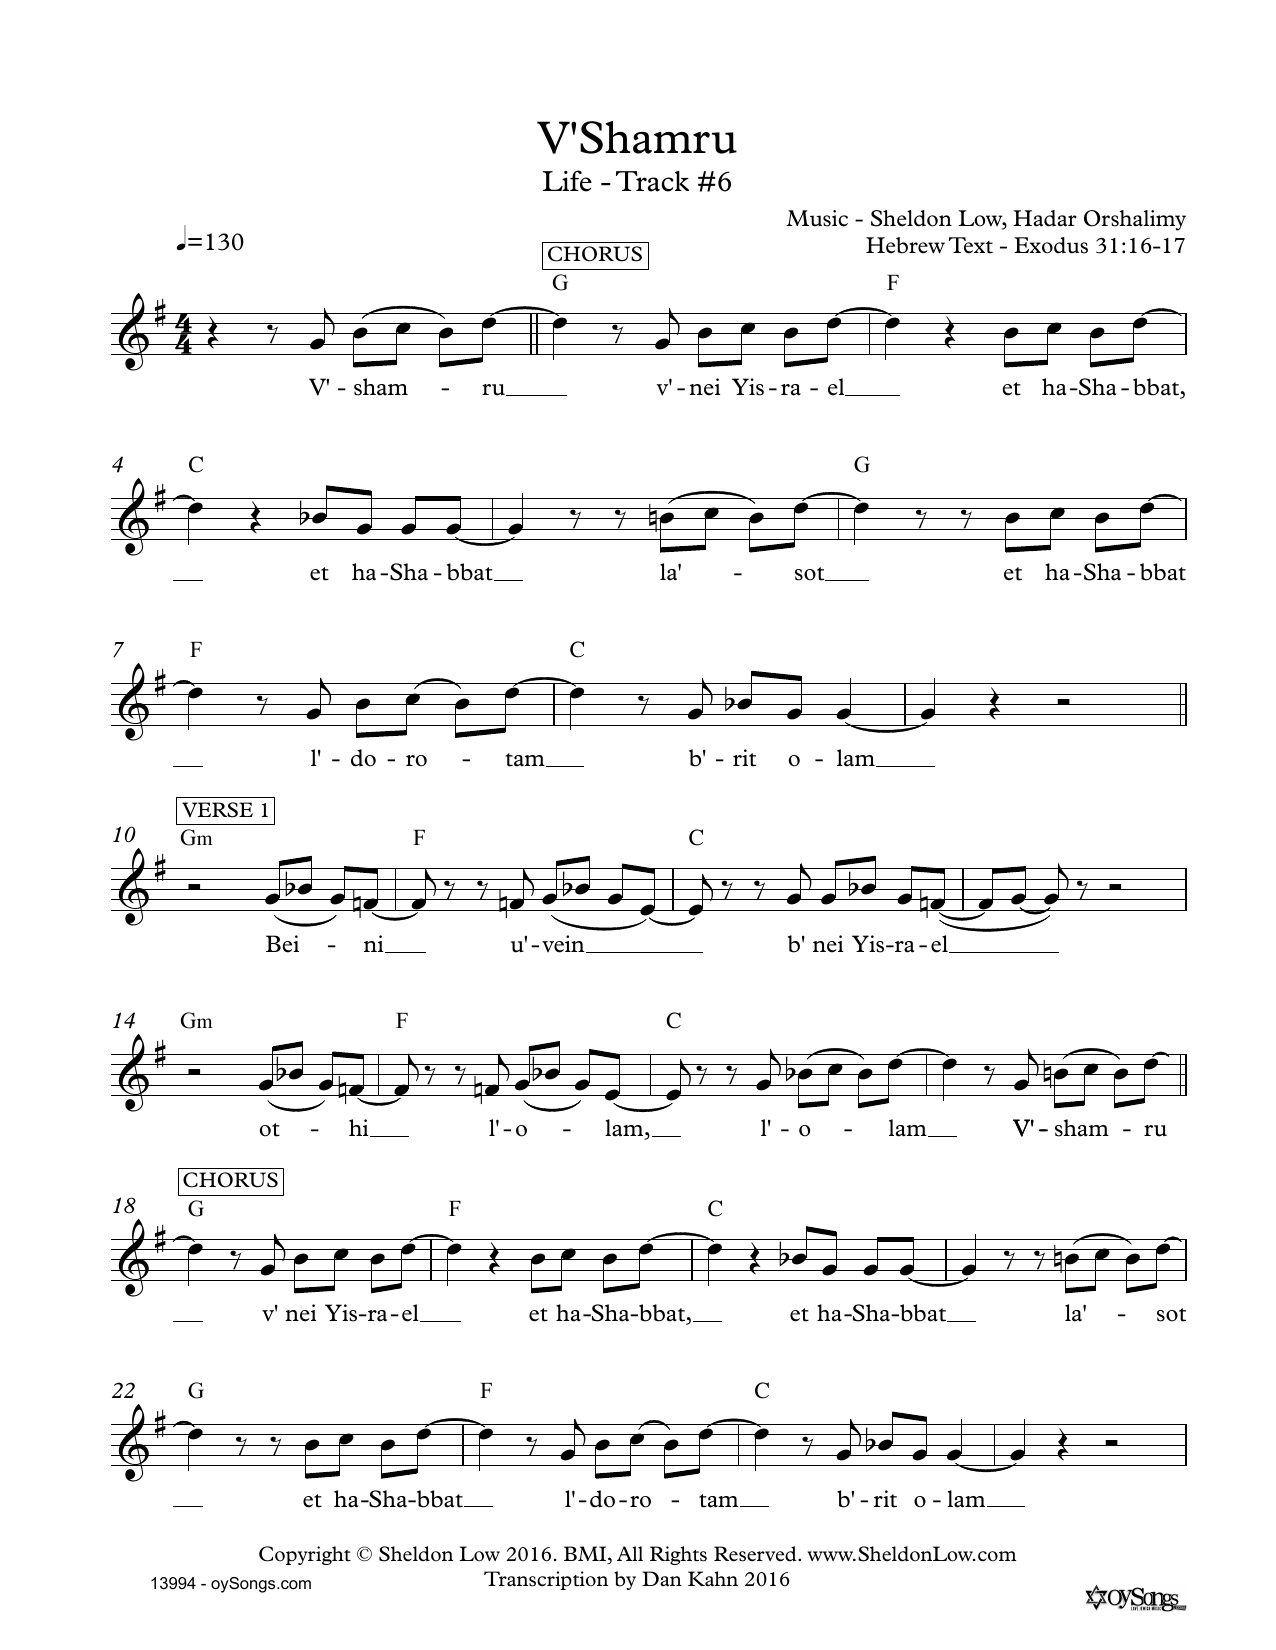 Sheldon Low V'shamru Sheet Music Notes & Chords for Lead Sheet / Fake Book - Download or Print PDF